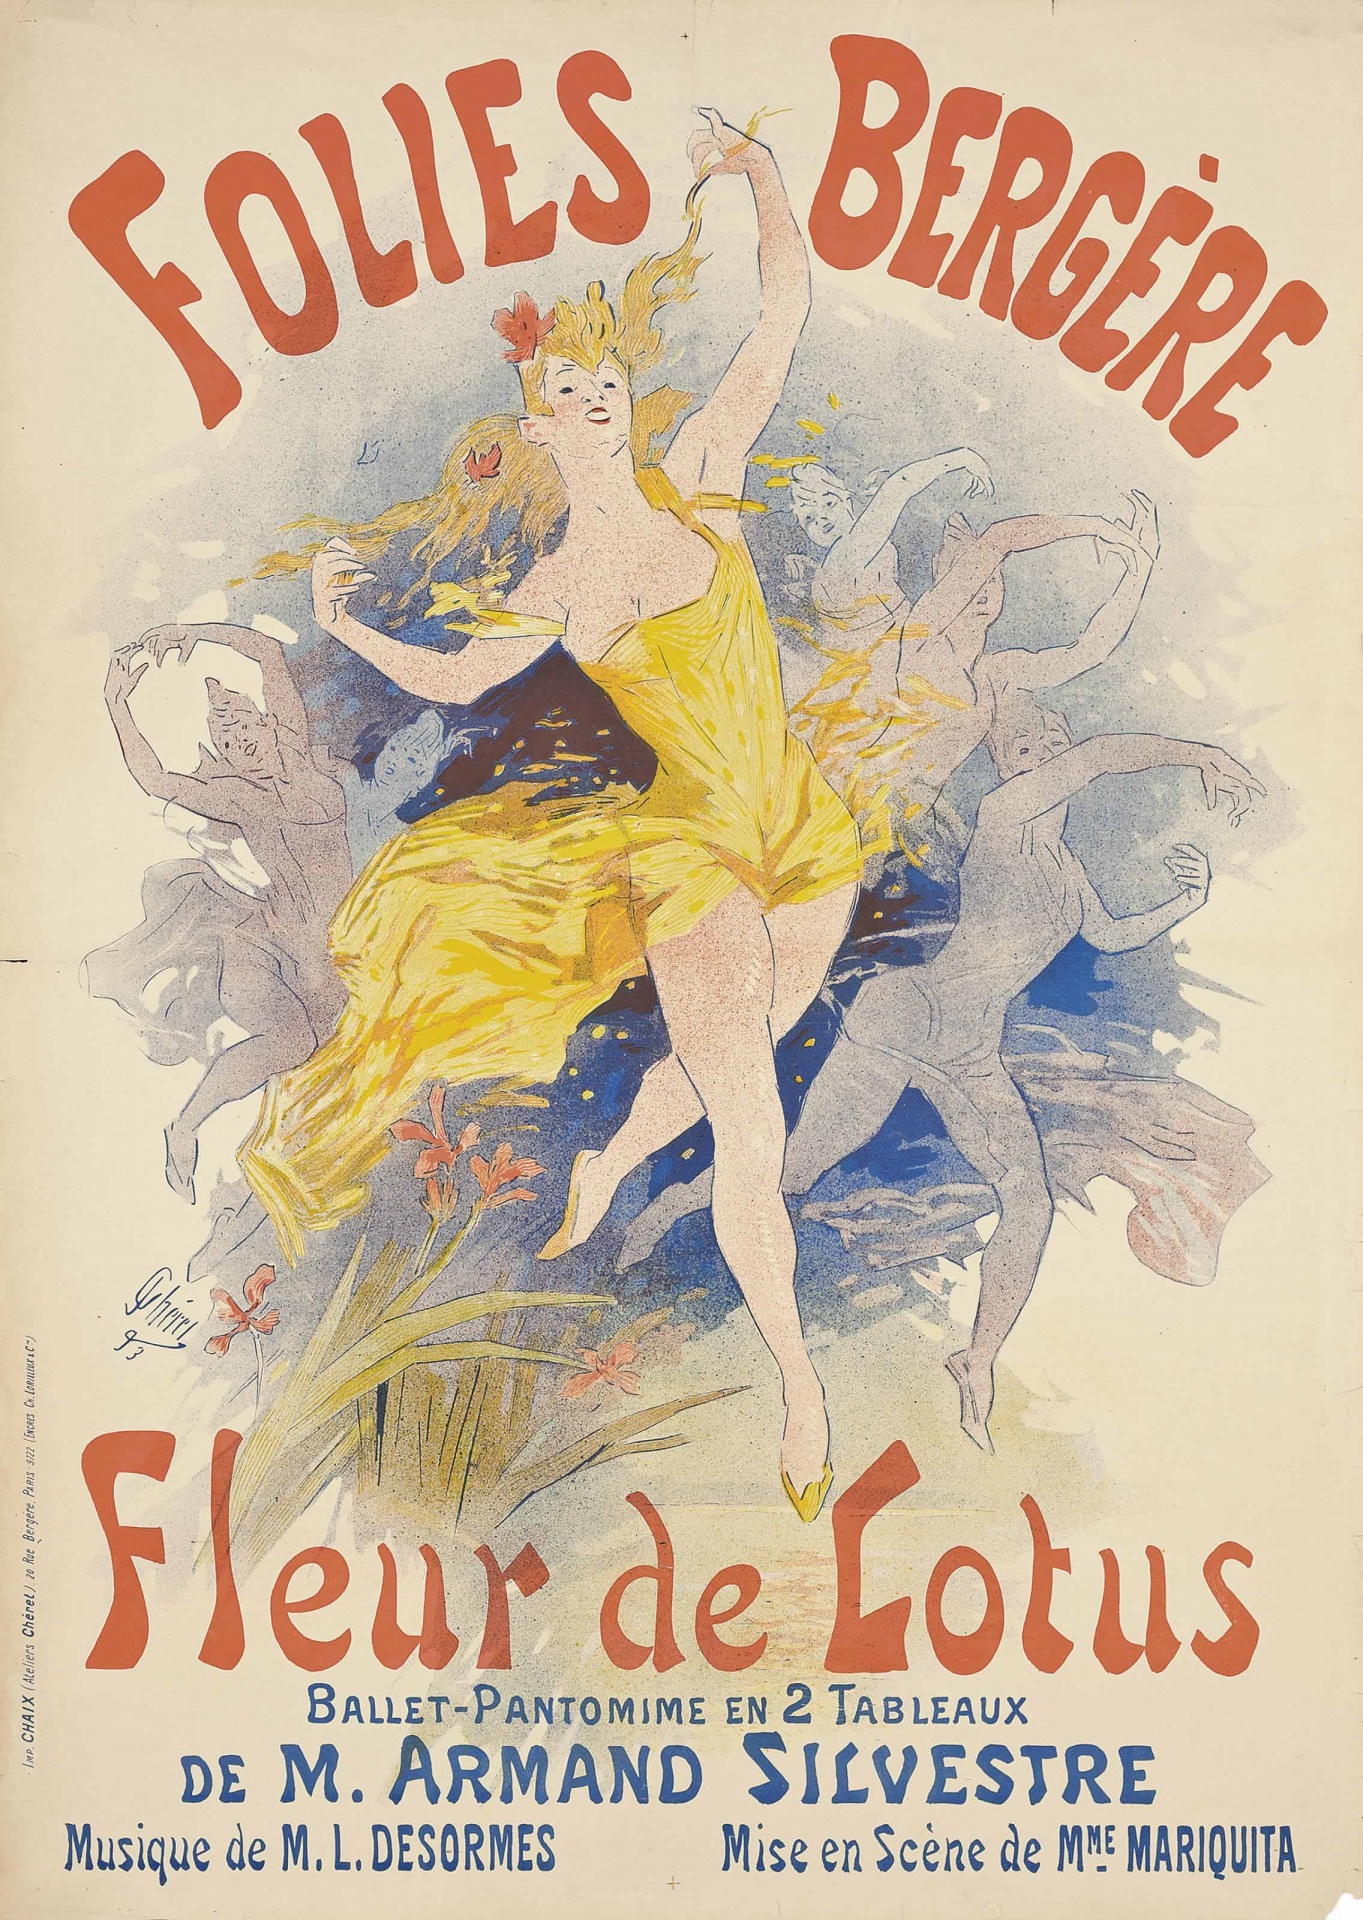 Vintage travel poster of Folies Bergère, France